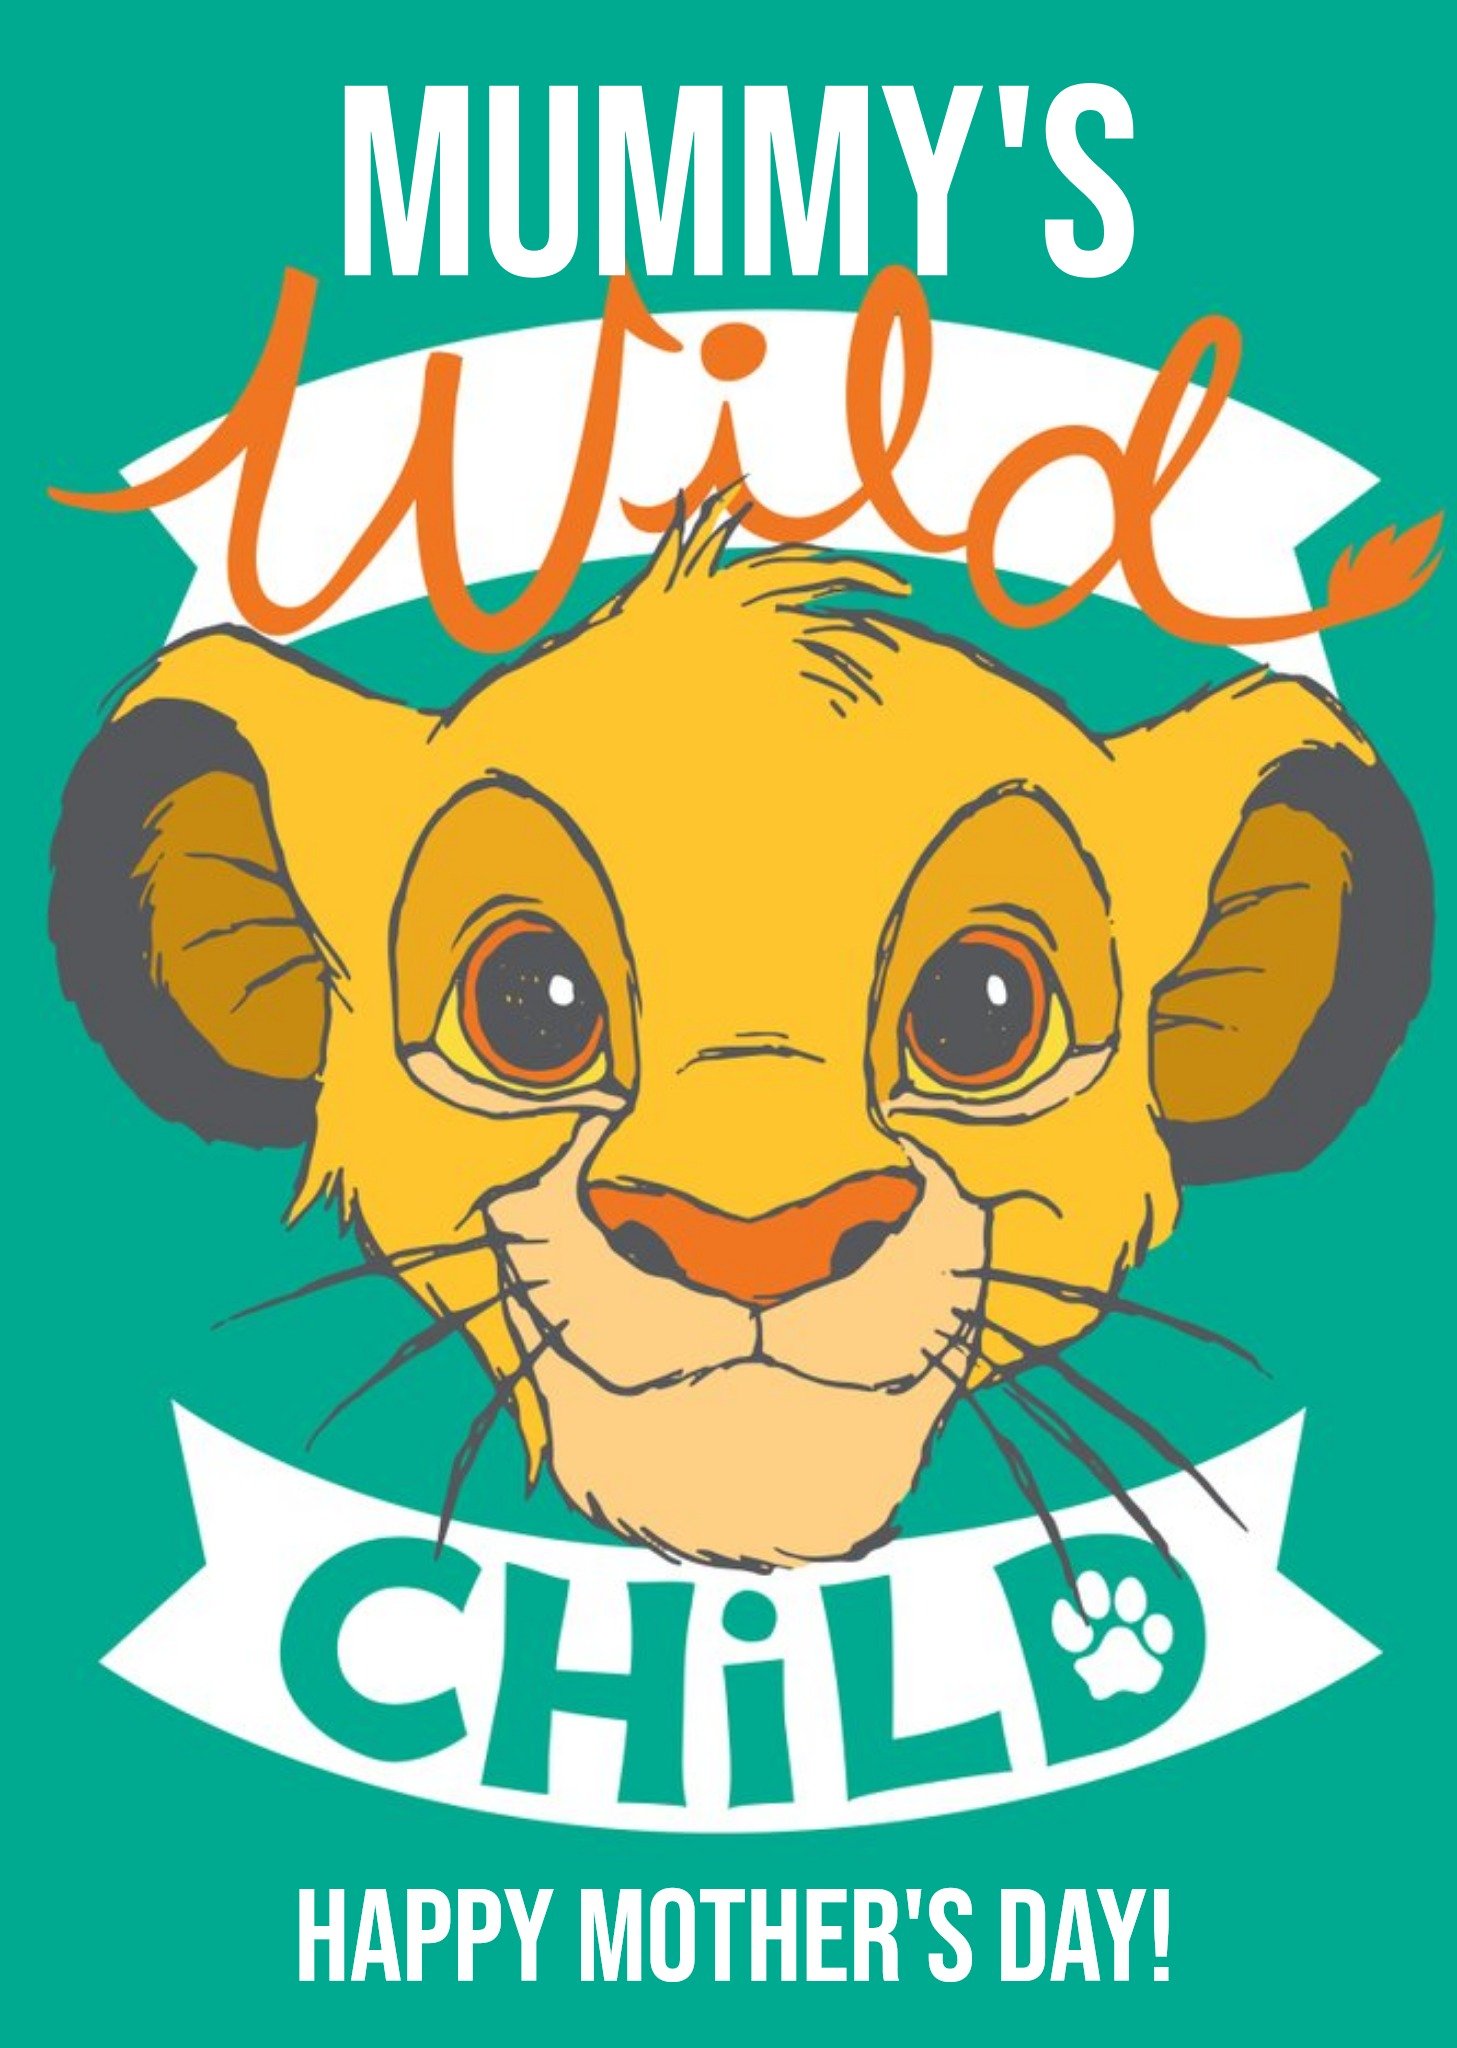 Disney The Lion King Mummy's Wild Child Simbe Mother's Day Card Ecard